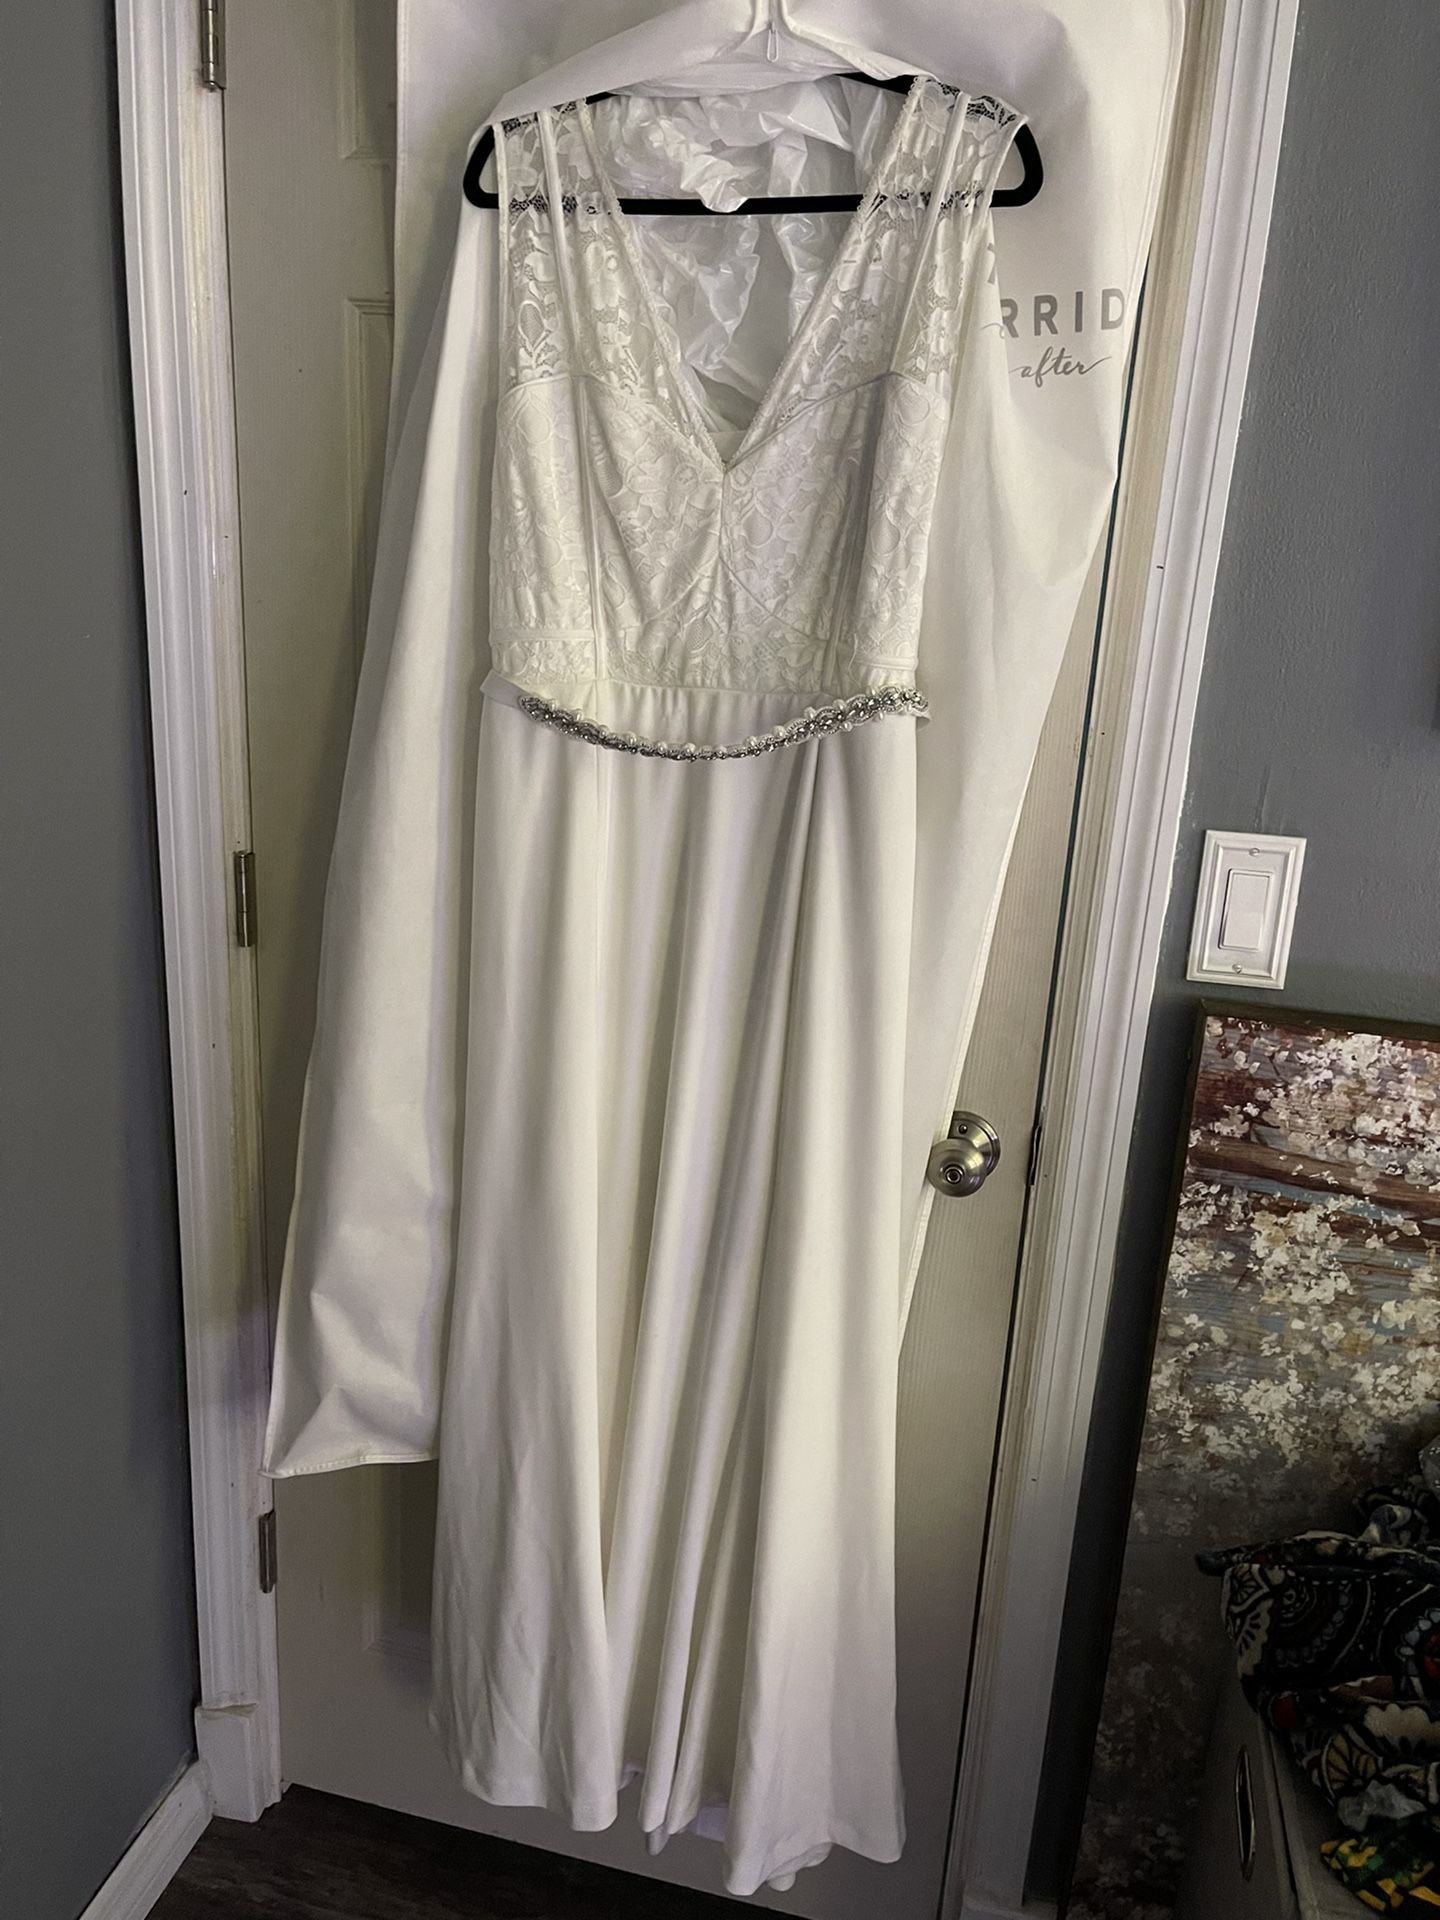 New Ivory Lace Inset Sleeveless Mermaid Wedding Dress from Torrid, Size 26